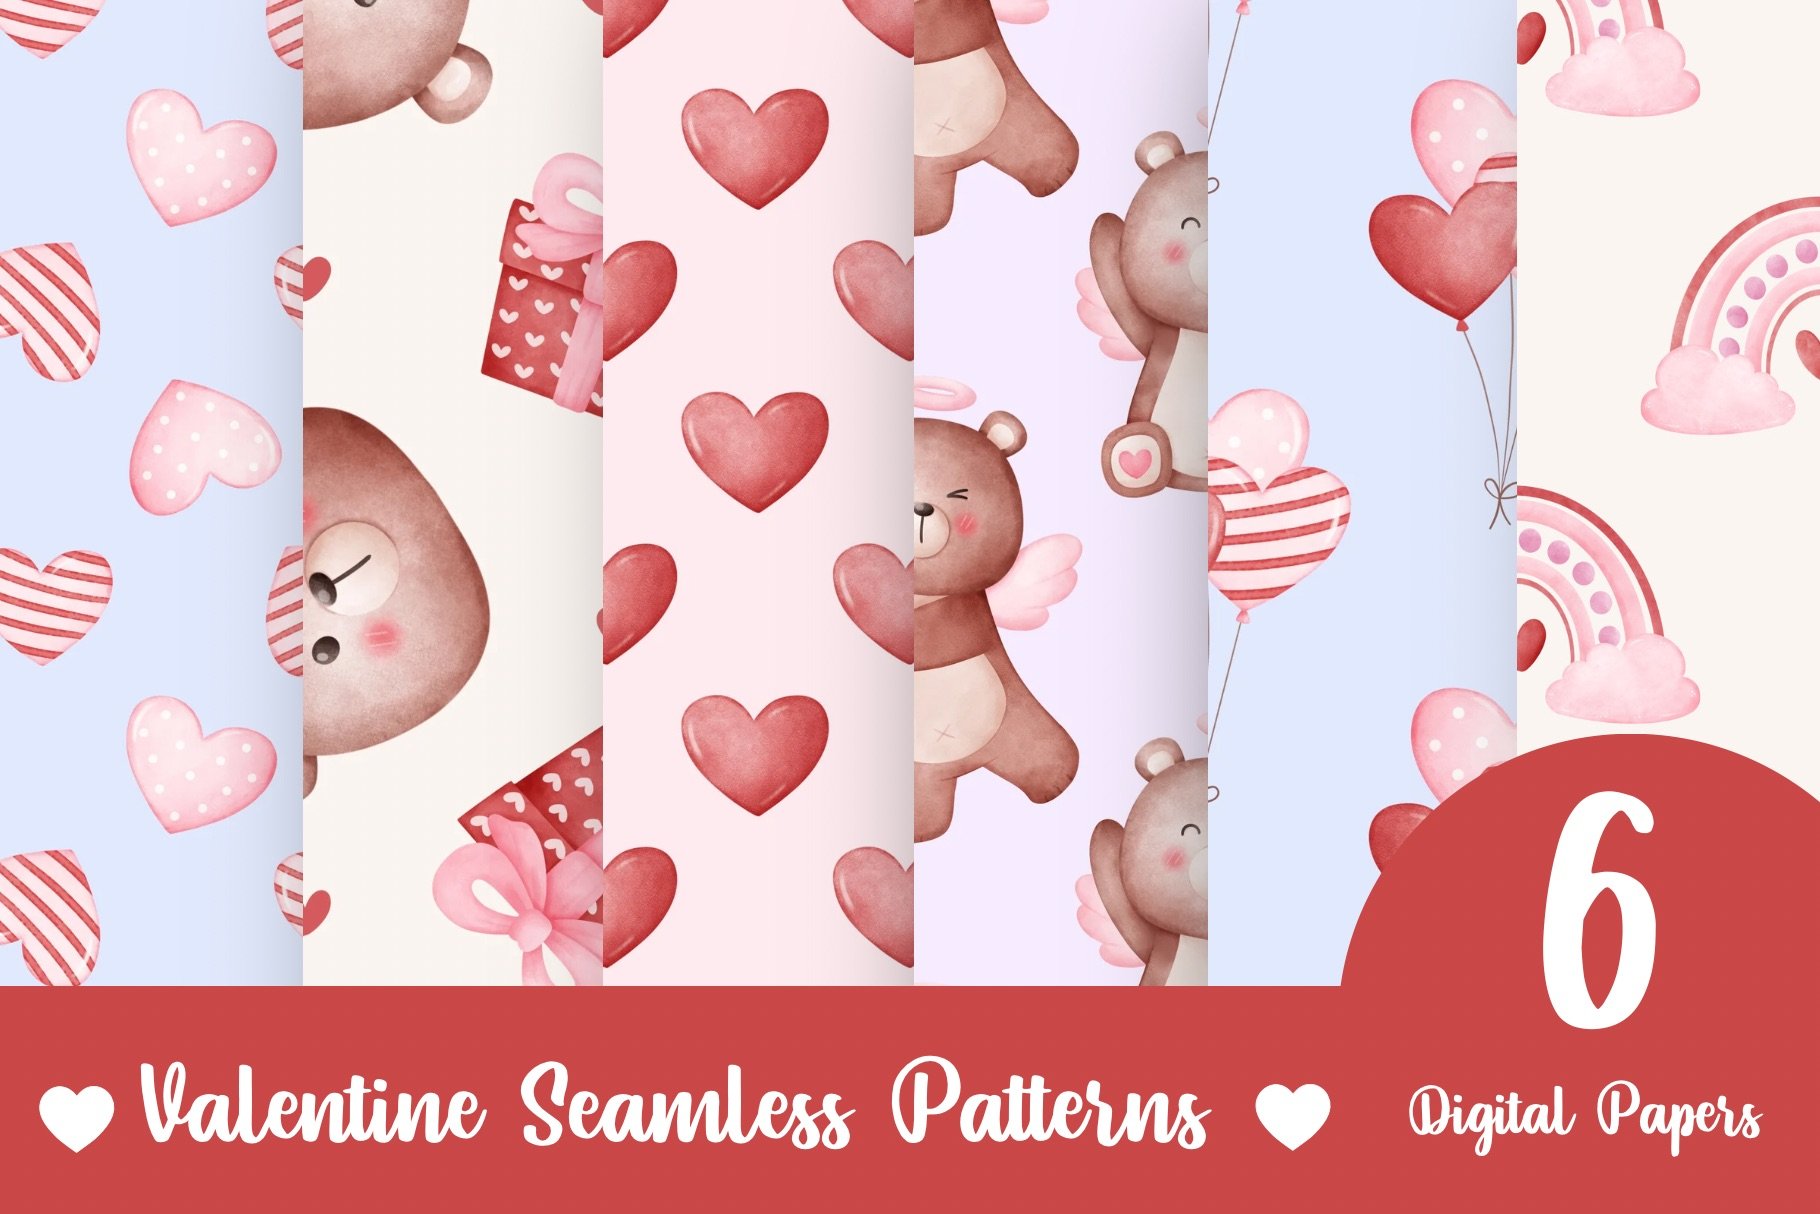 boho teddy bear digital paper seamless pattern